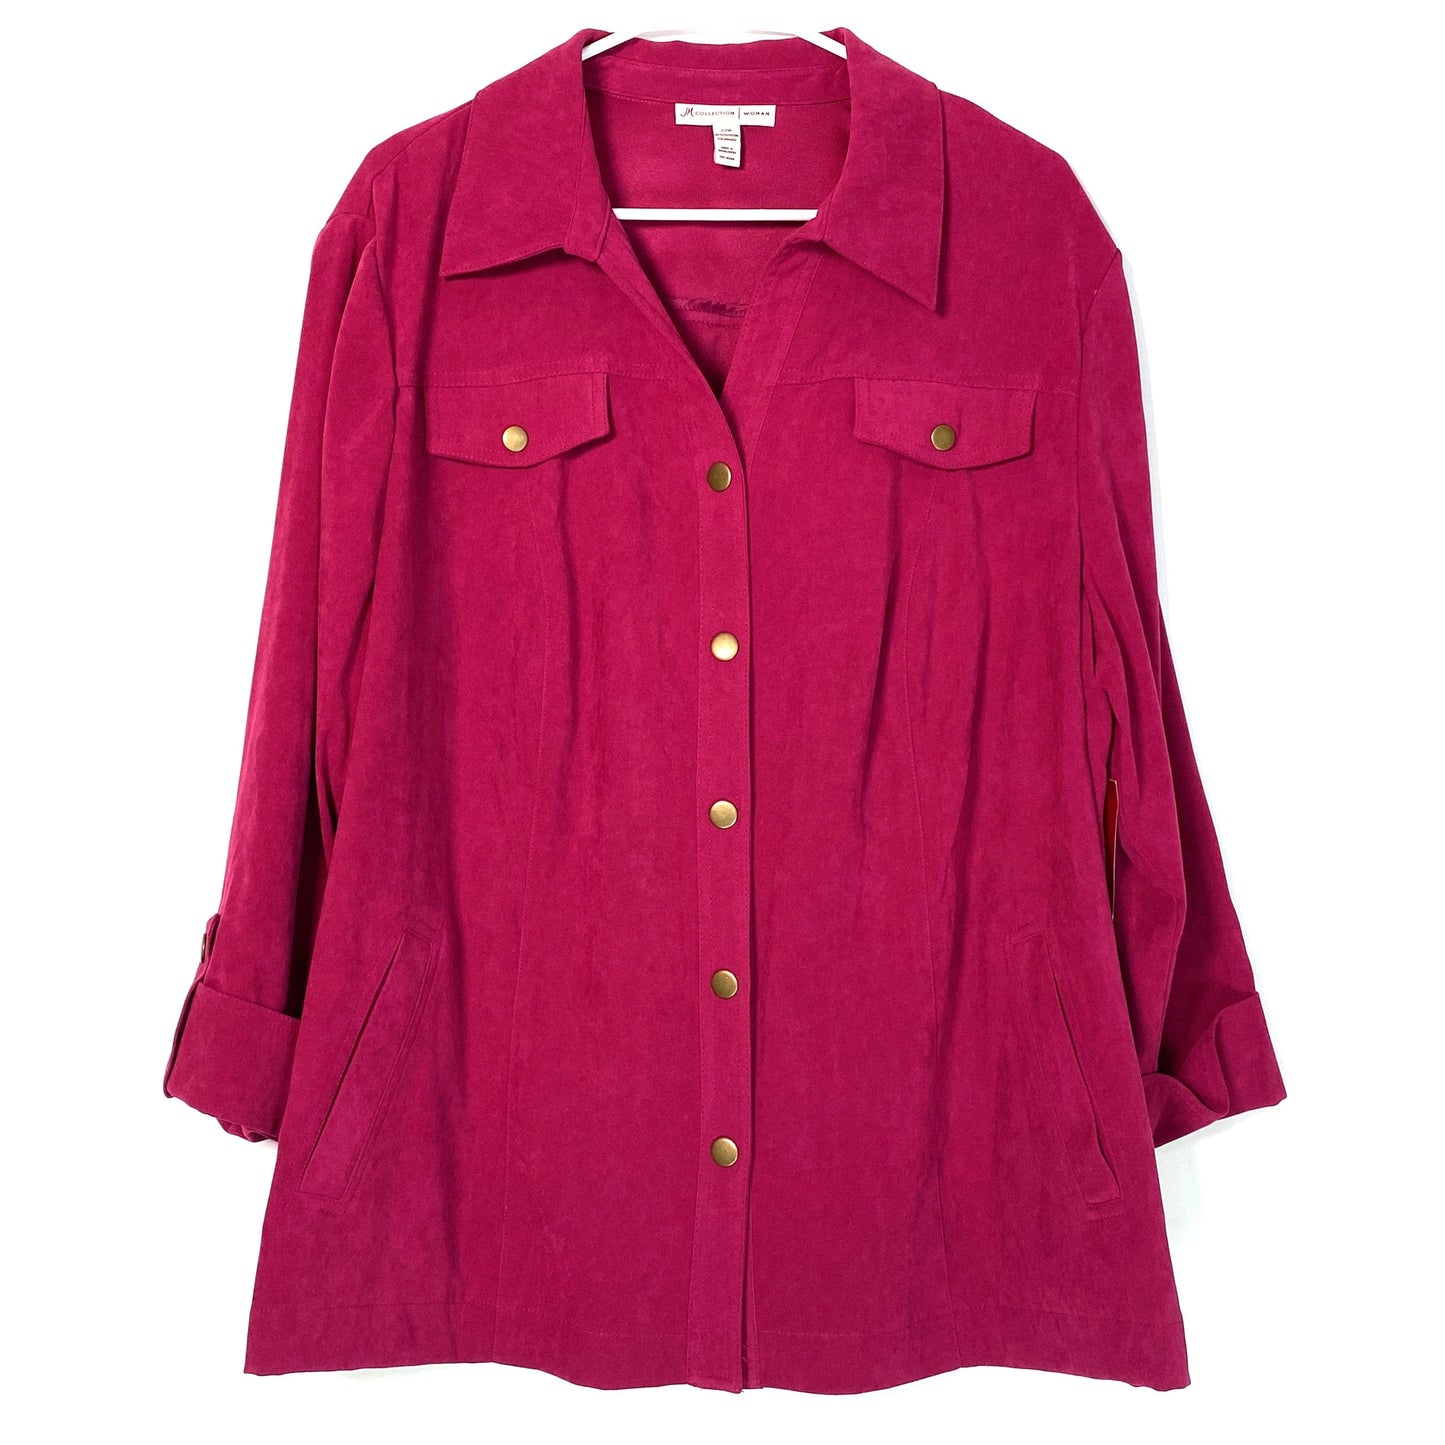 JM Collection Woman Womens Size 22W Pink Button-Up Top Blouse Shirt L/s